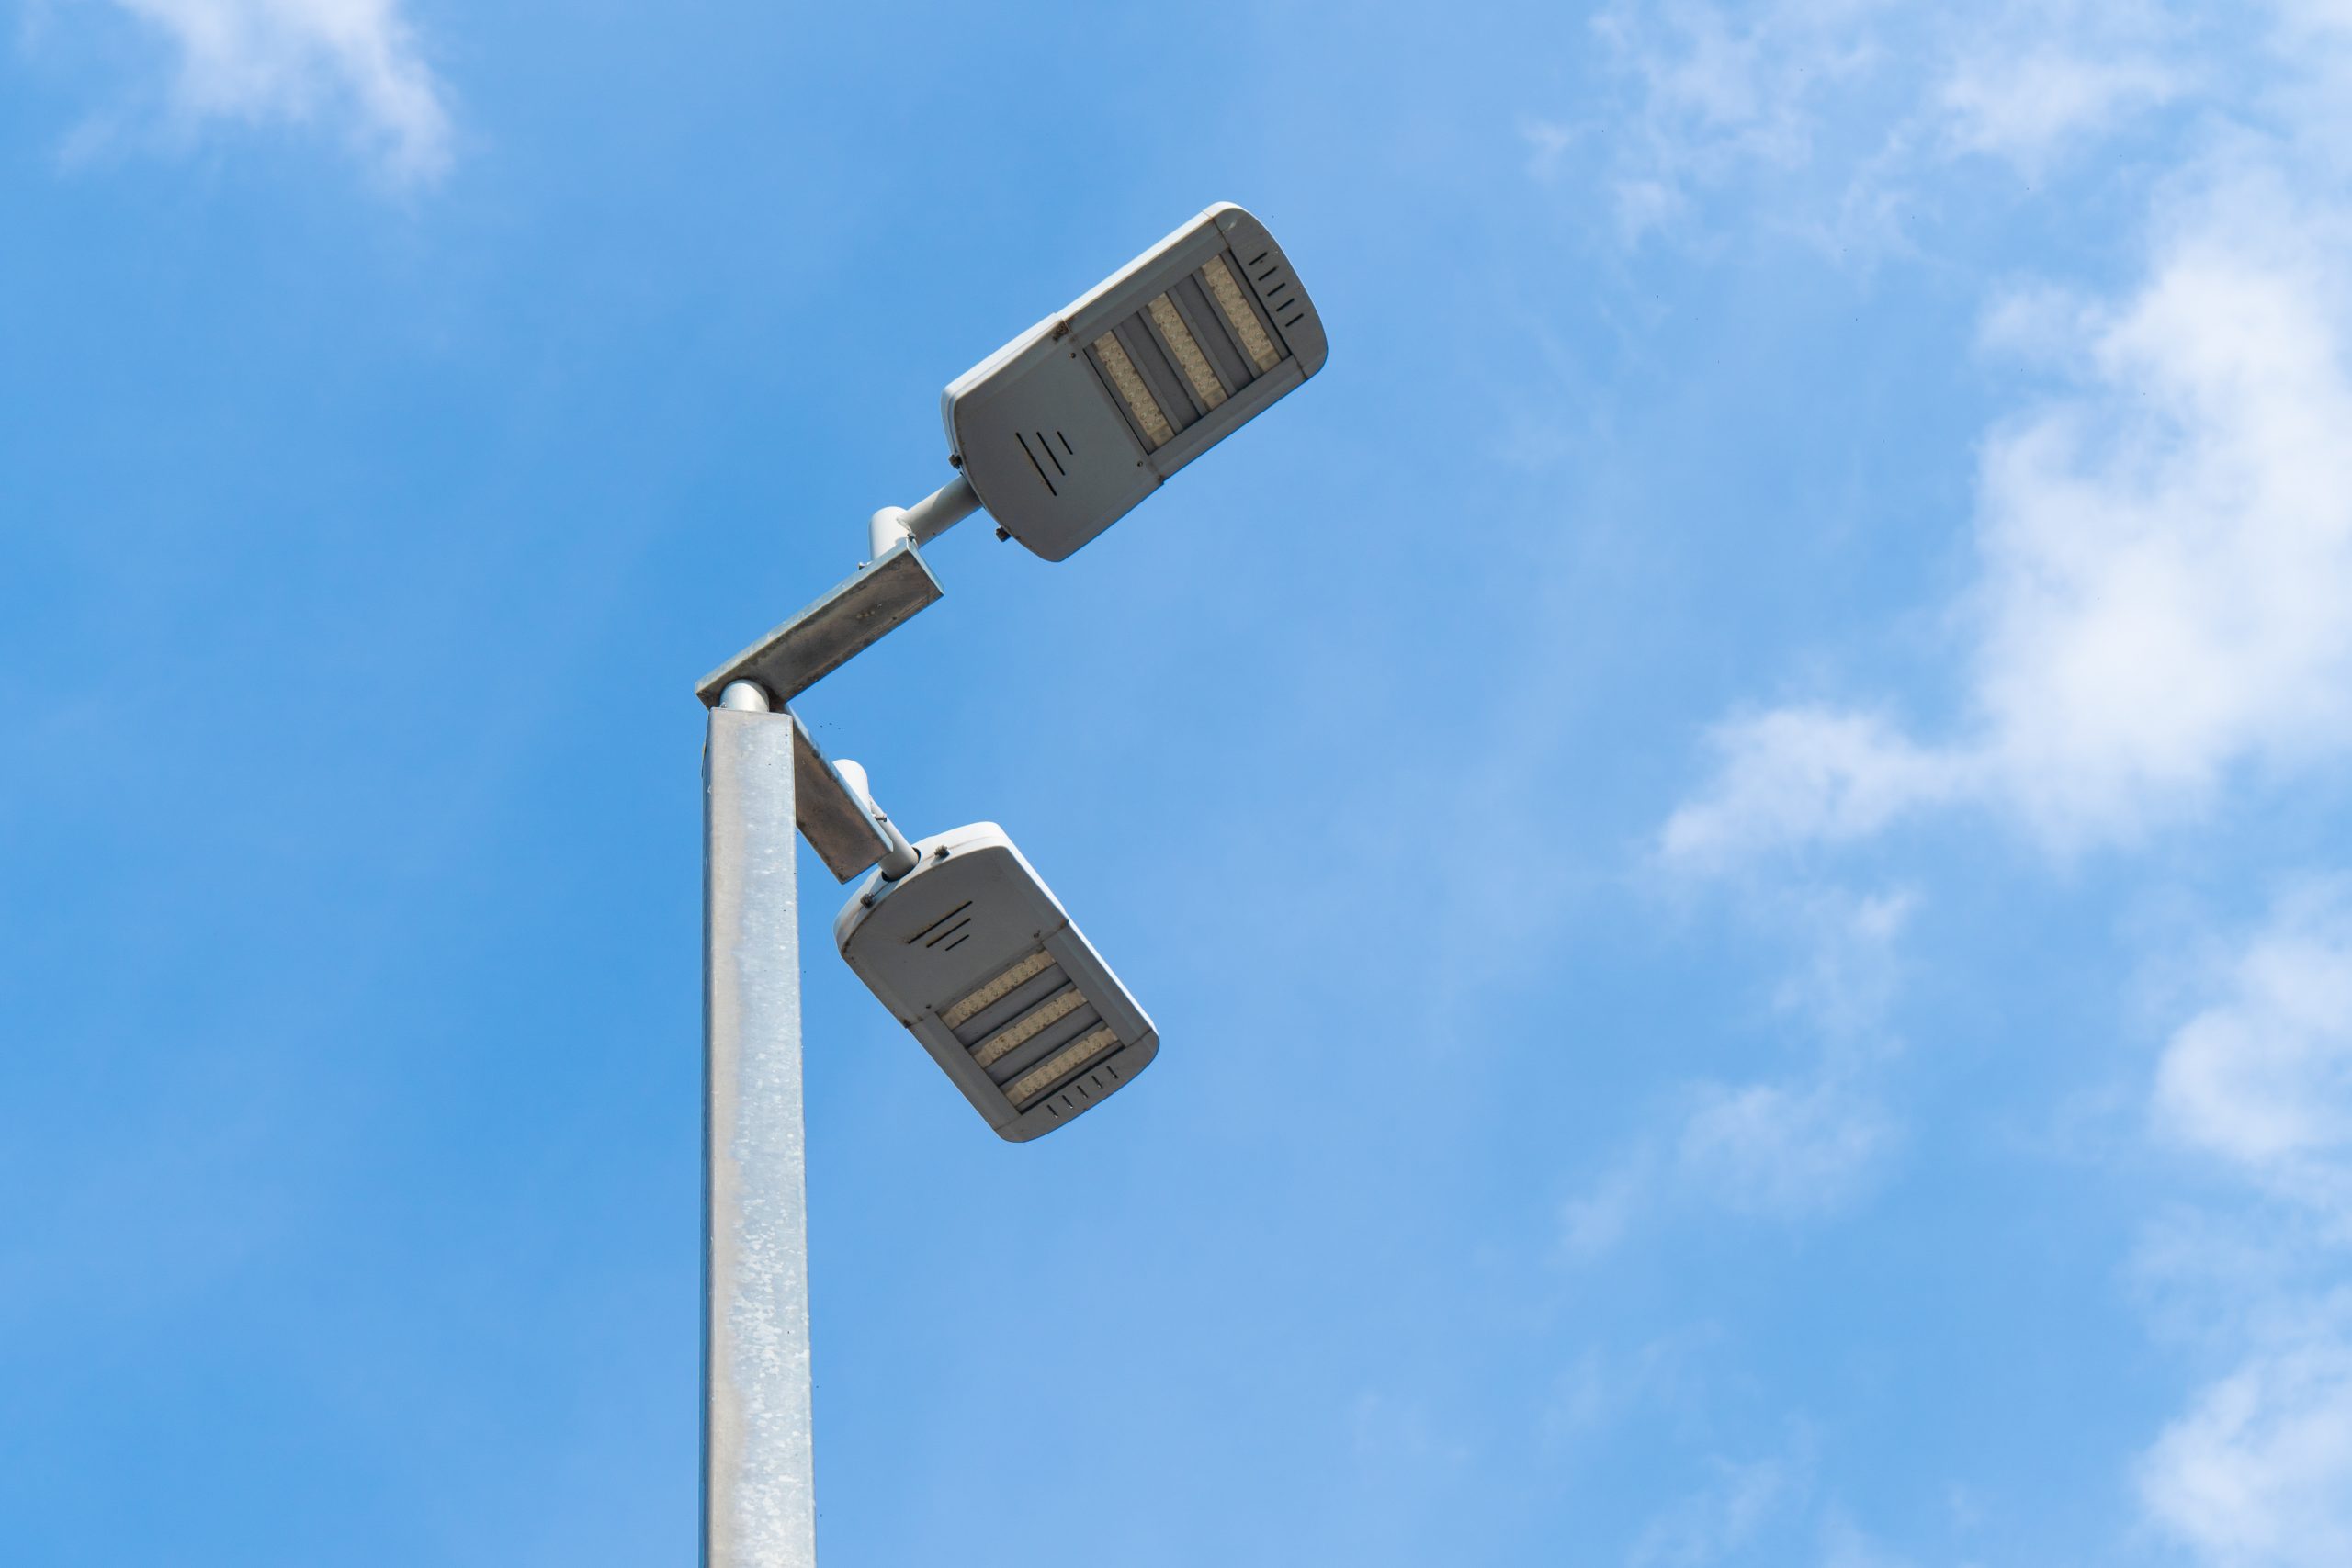 Town of Pelham, Ontario Set To Upgrade Streetlights To LED Standard